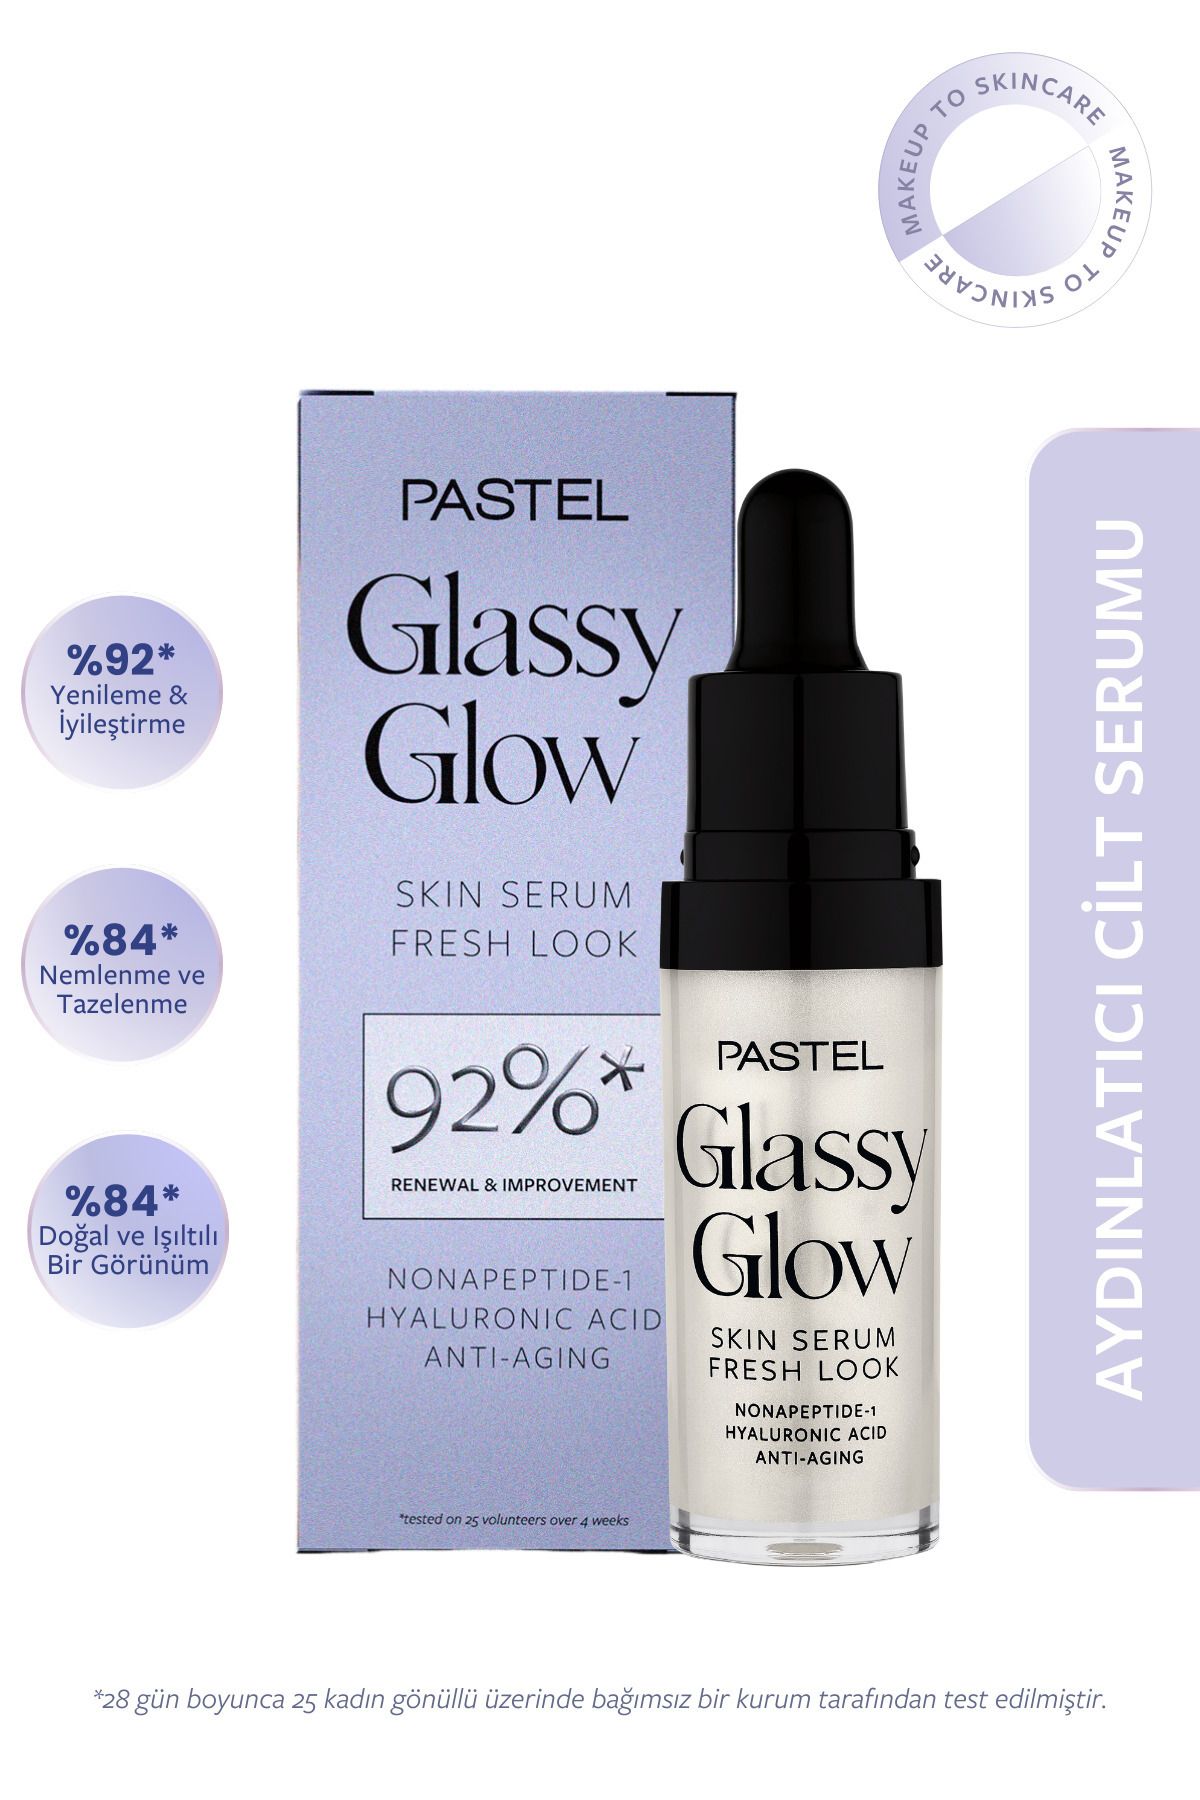 Pastel Glassy Glow Skin Serum Fresh Look Yüz Serumu 14.4 ml